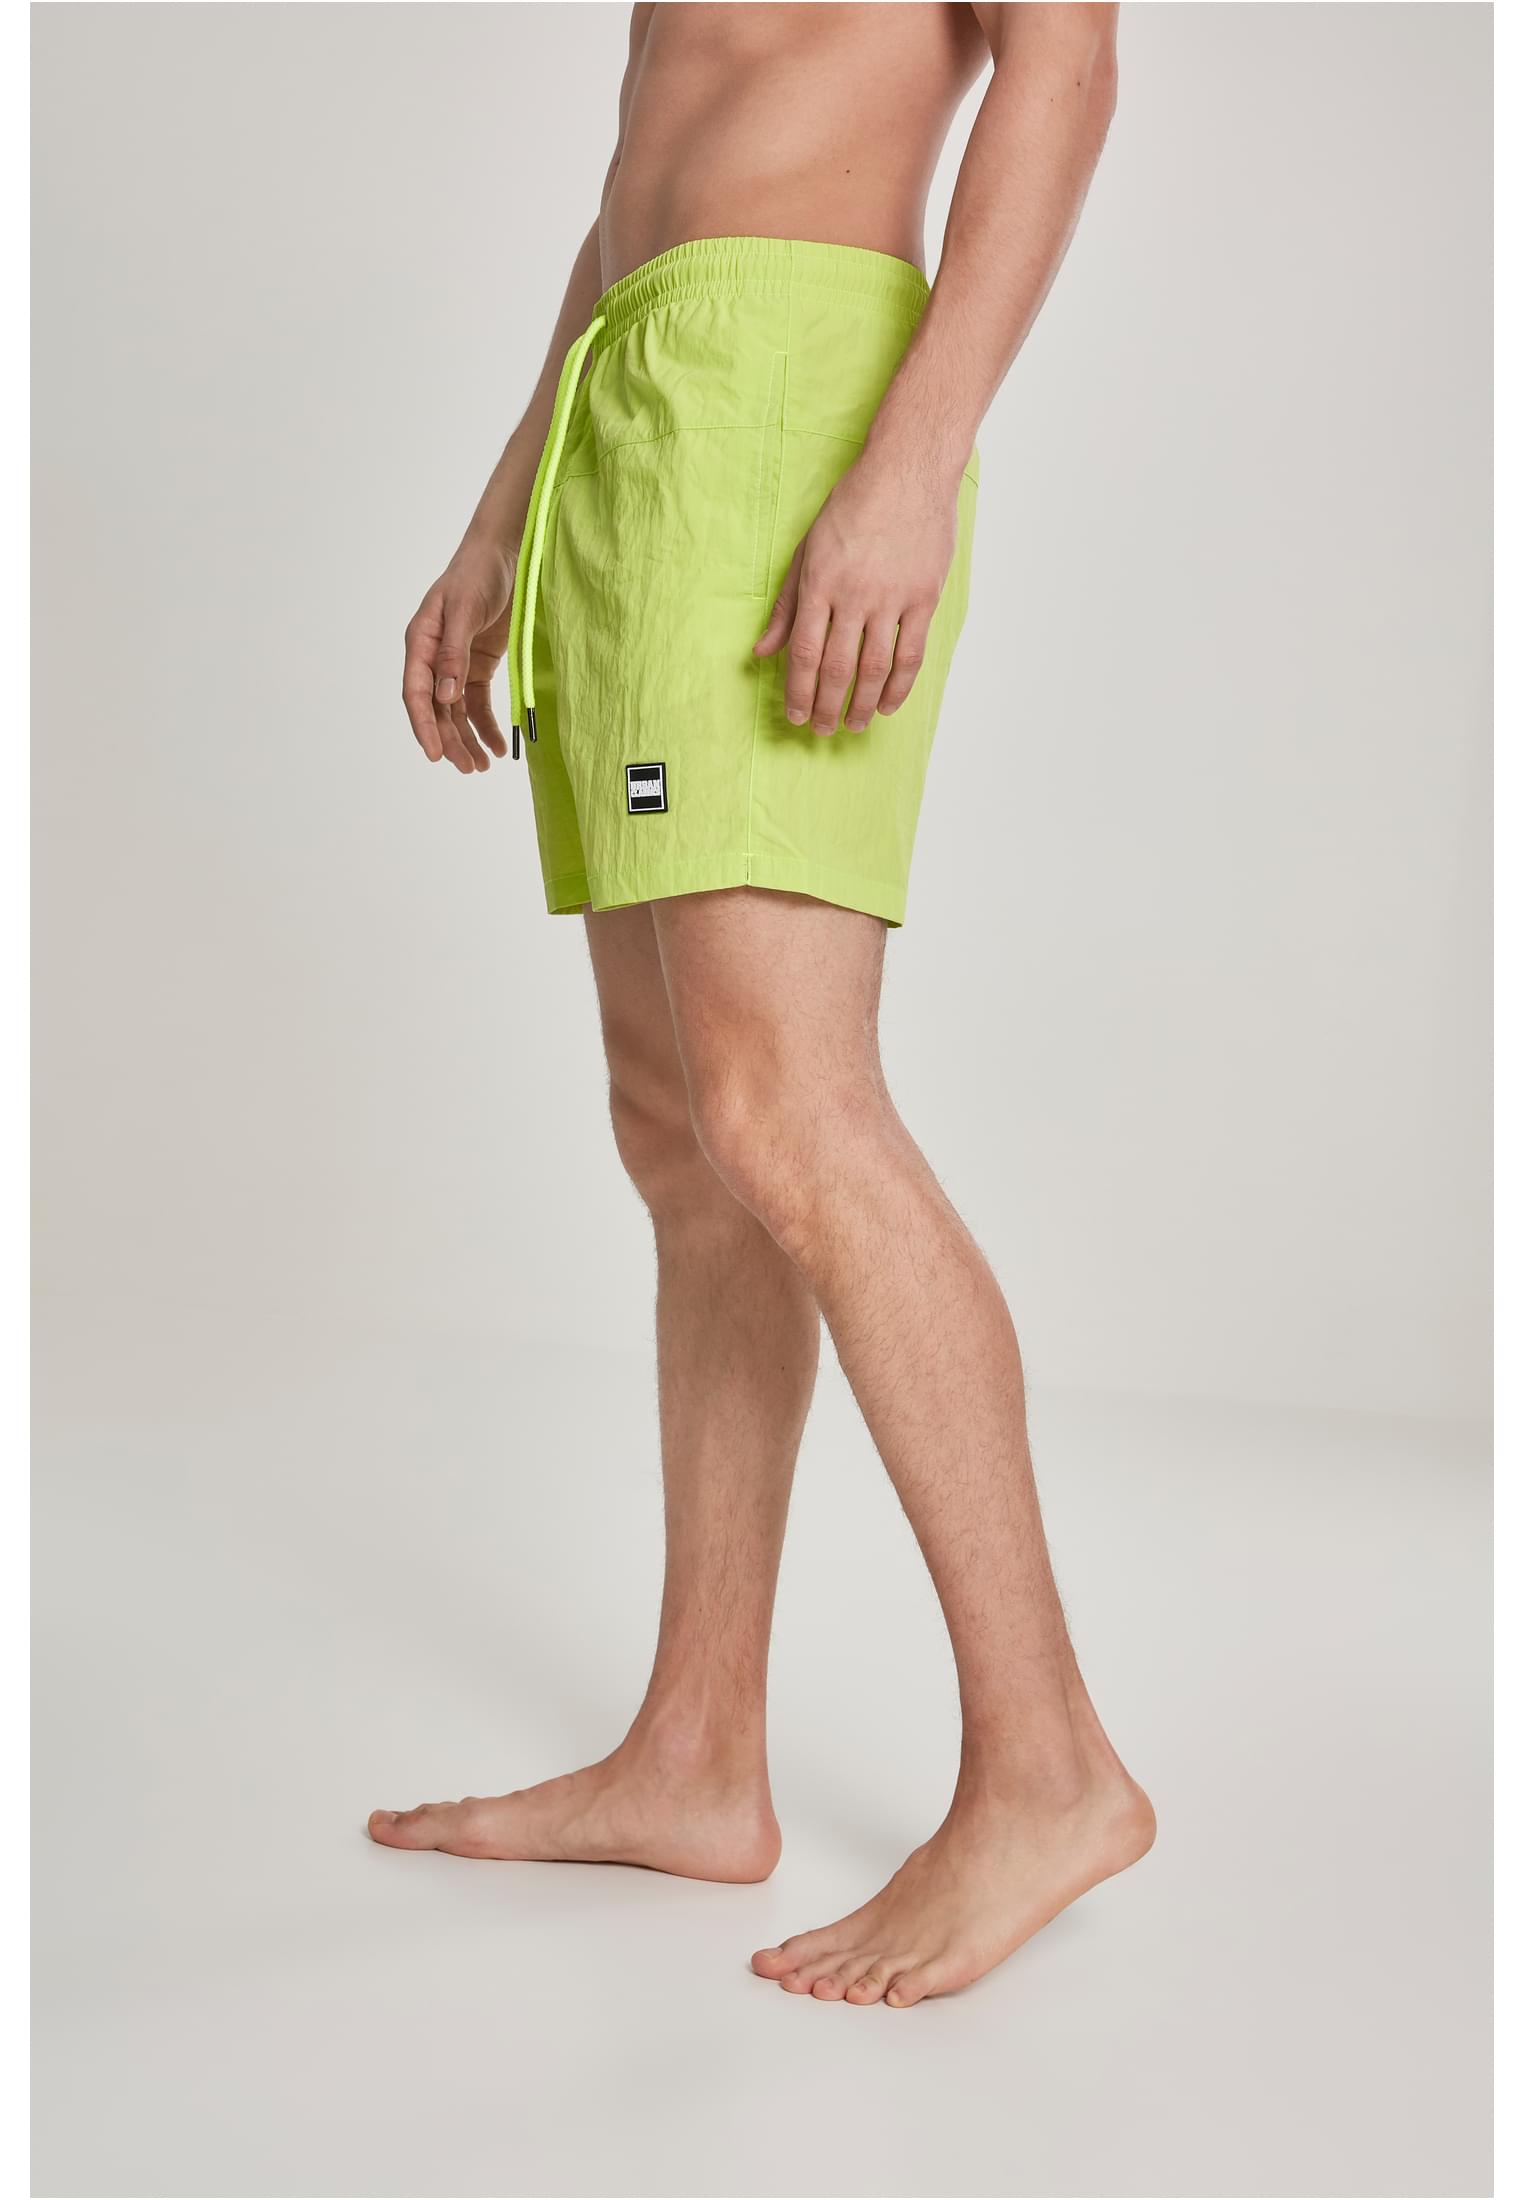 Plus Size Block Swim Shorts in Farbe frozen yellow